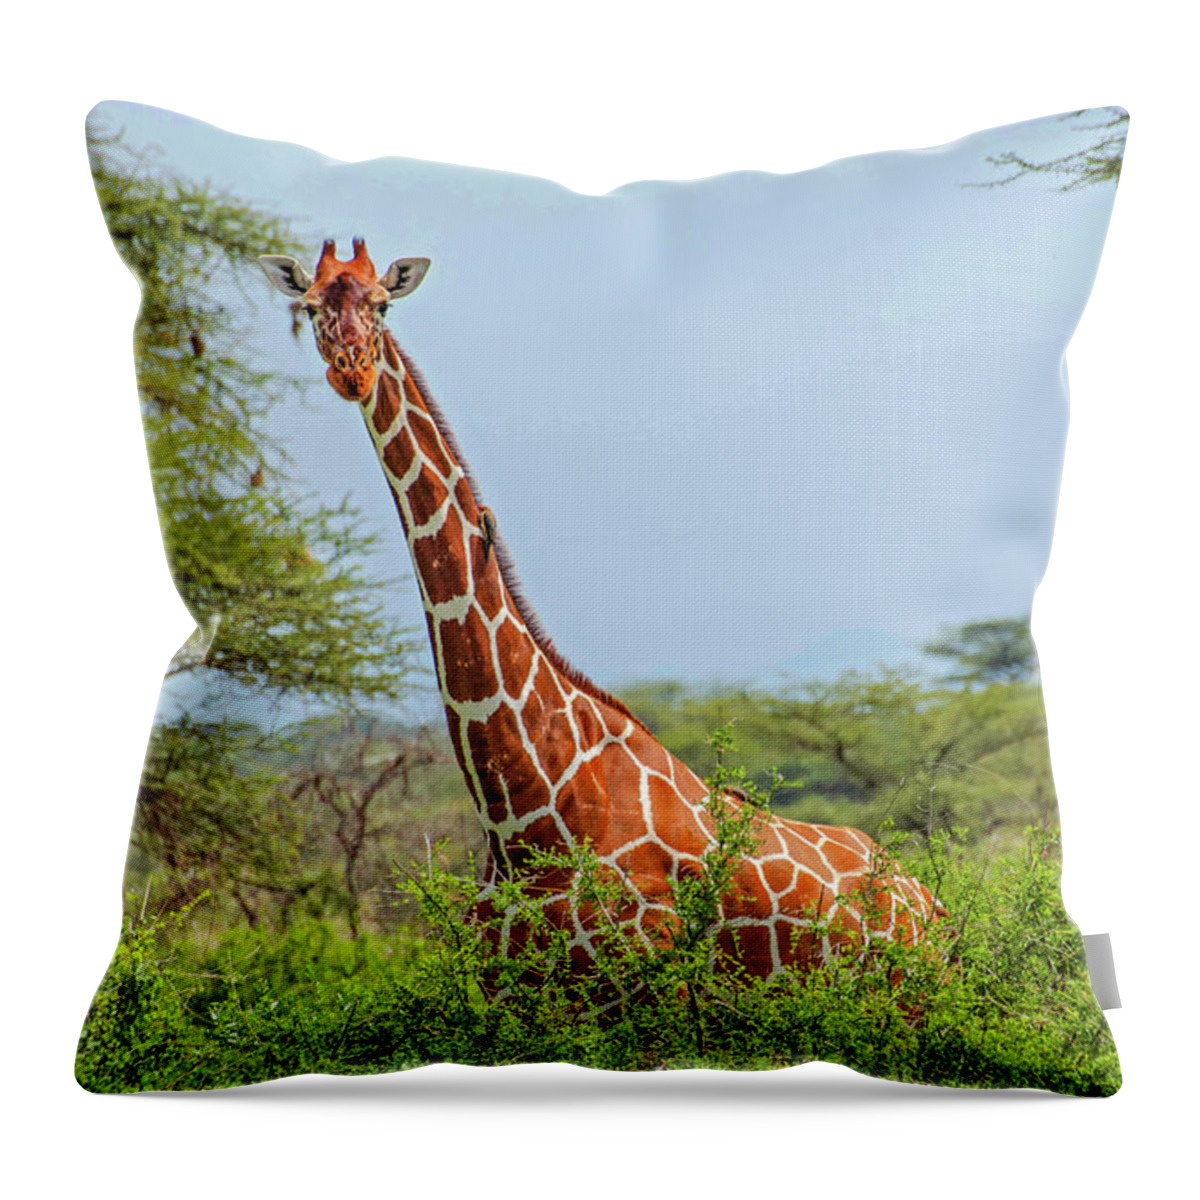 Giraffe Throw Pillow featuring the photograph Giraffe in the shrubs by Peggy Blackwell